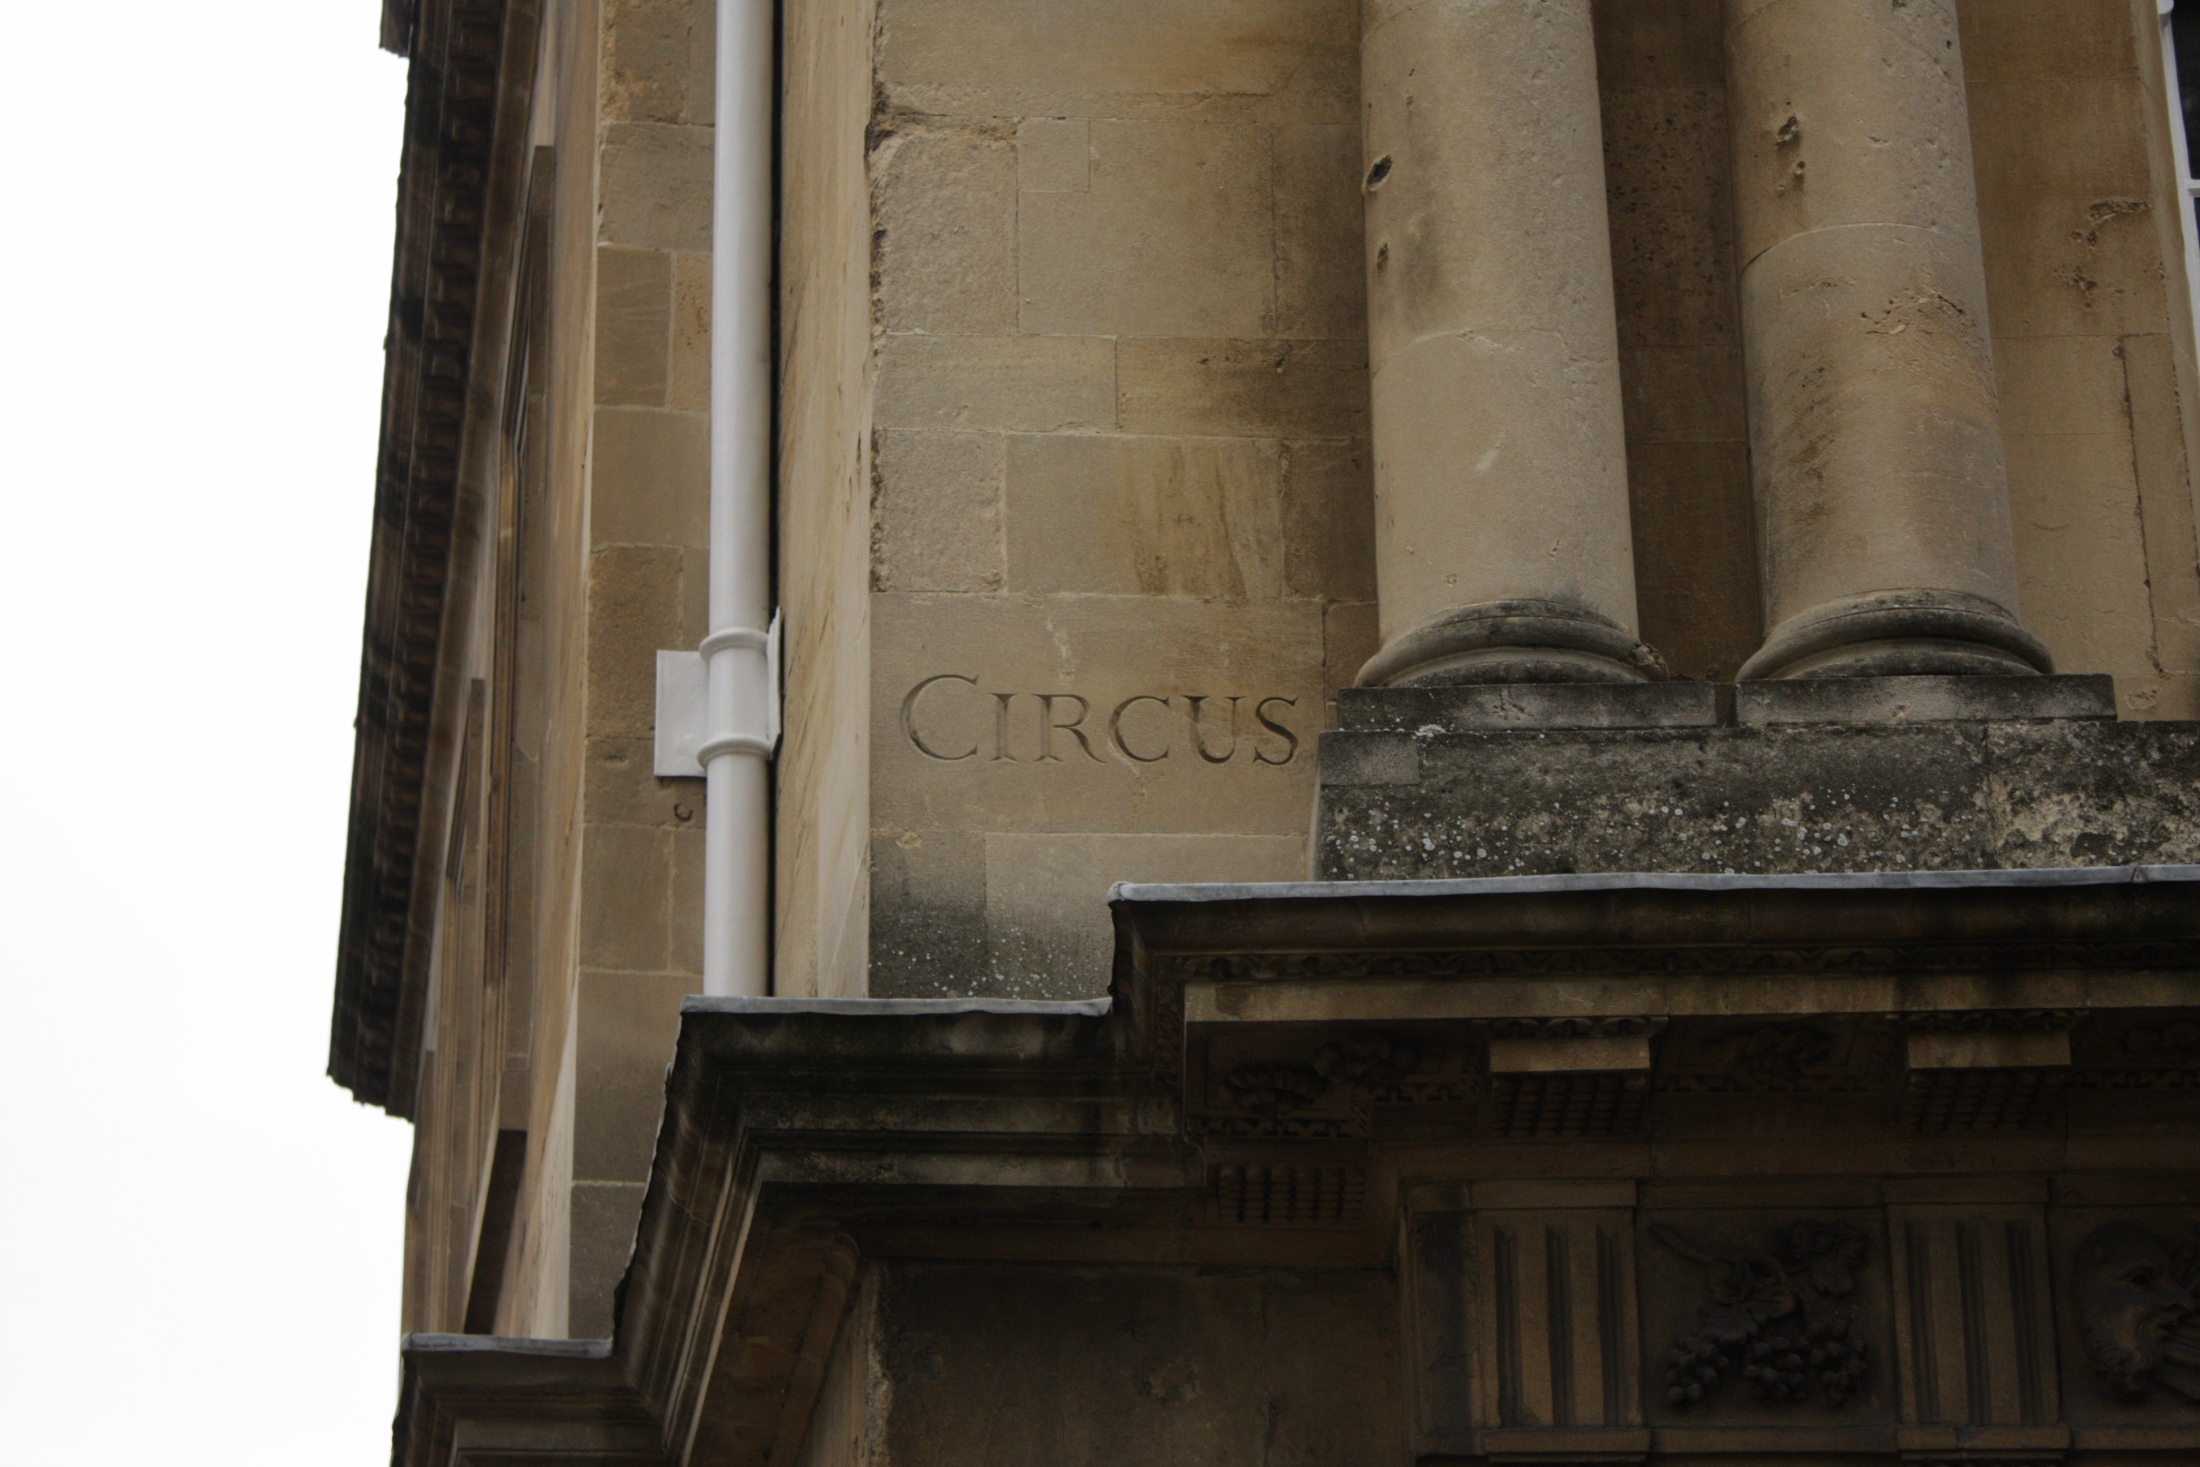 The Circus in Bath